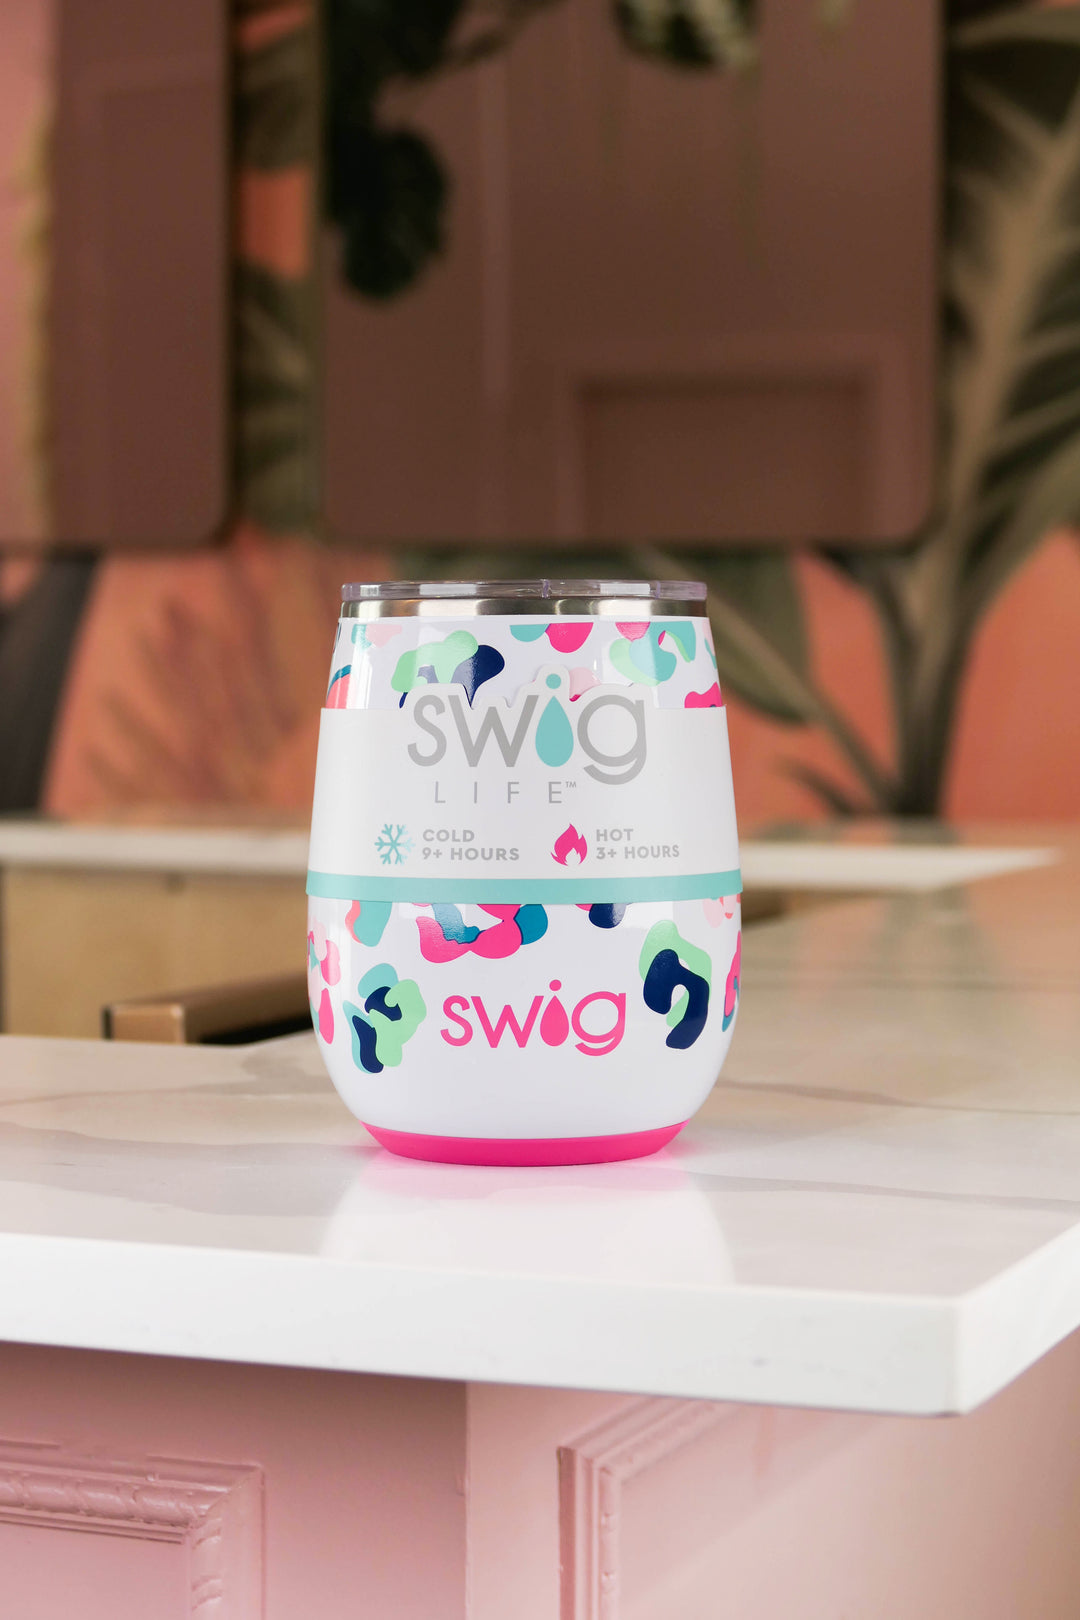 Swig Life 18 oz Travel Mug - Shimmer Mermazing